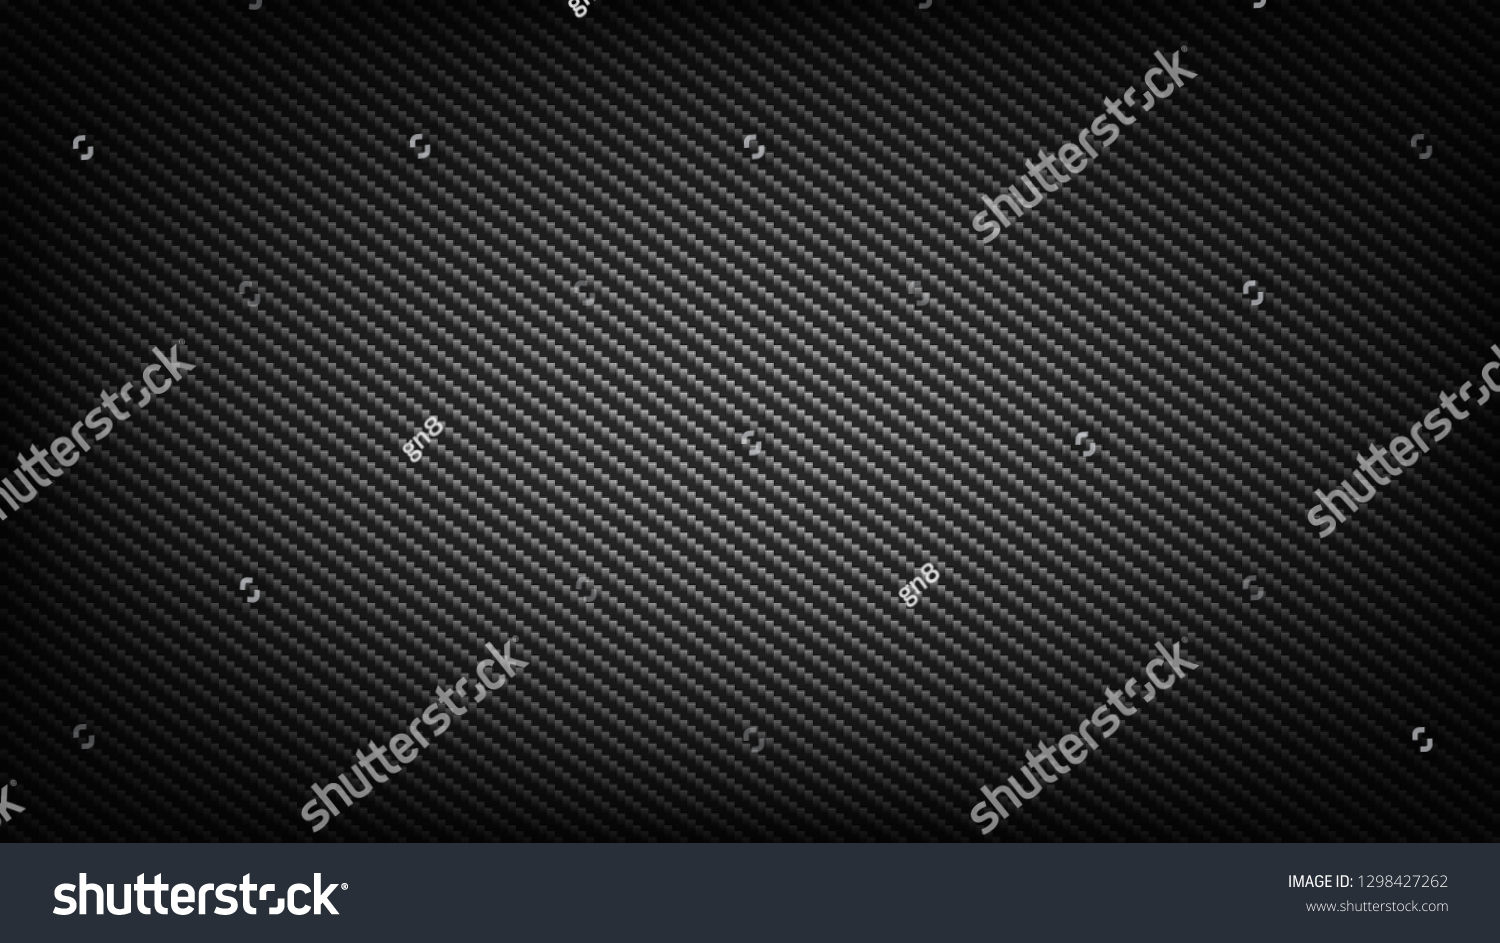 SVG of Carbon fiber wide screen background. Technological and science backdrop.  svg